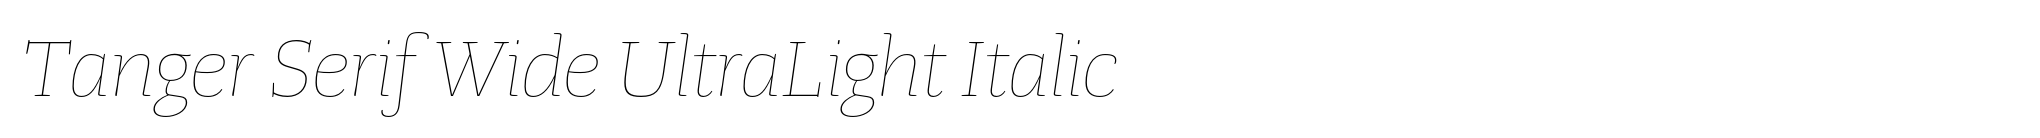 Tanger Serif Wide UltraLight Italic image